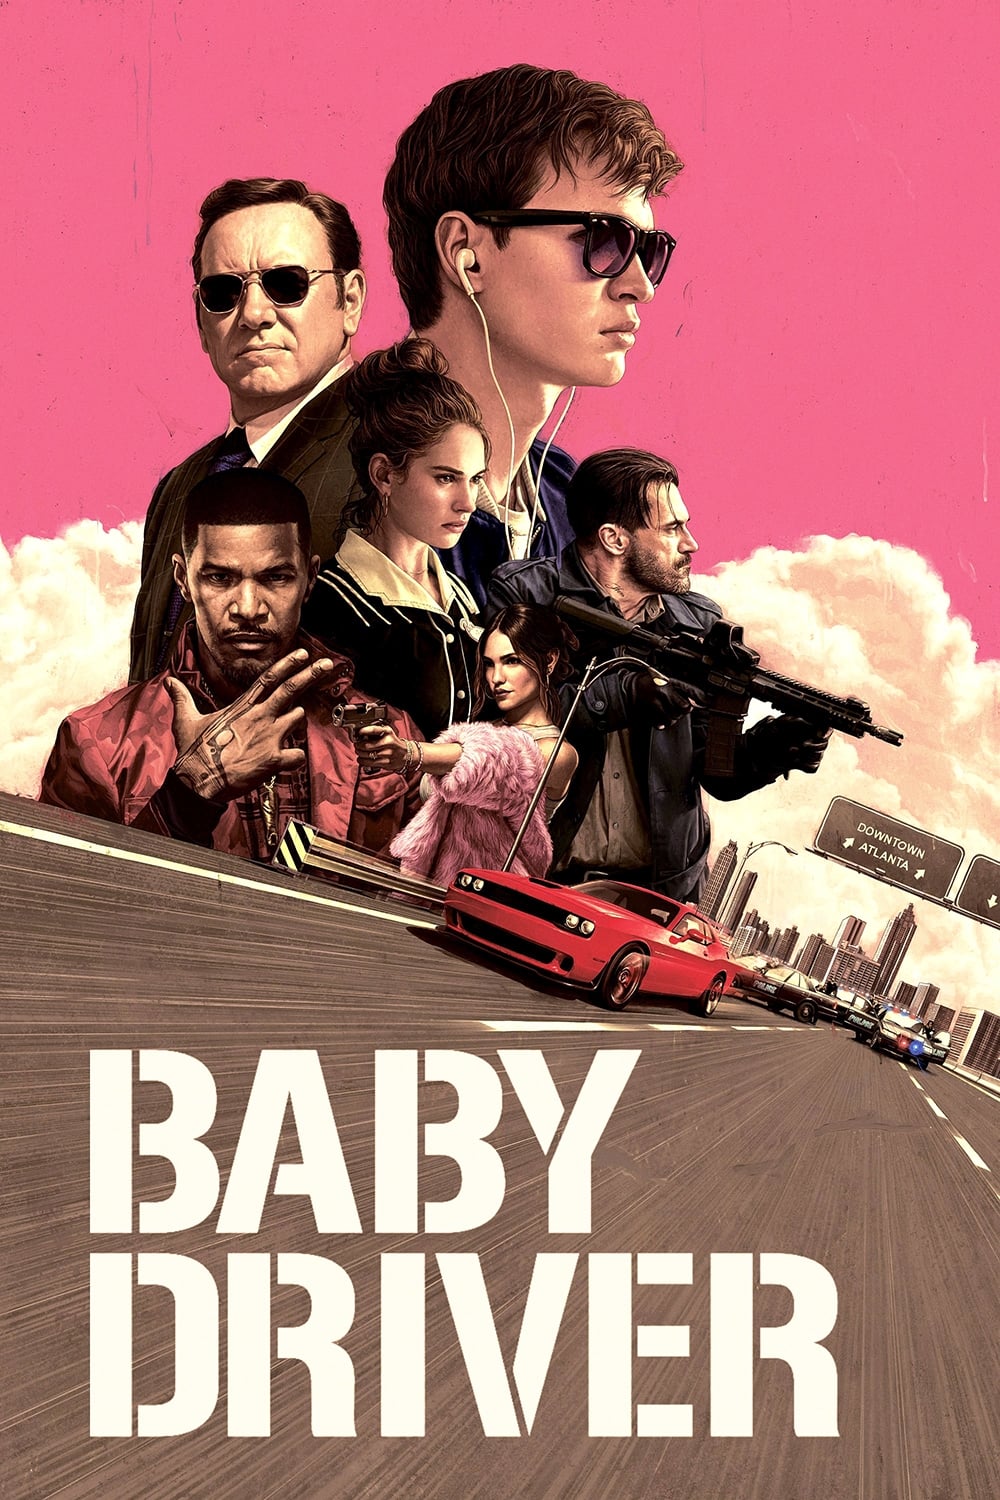 Baby: El aprendiz del crimen (2017) Full HD 1080p Latino